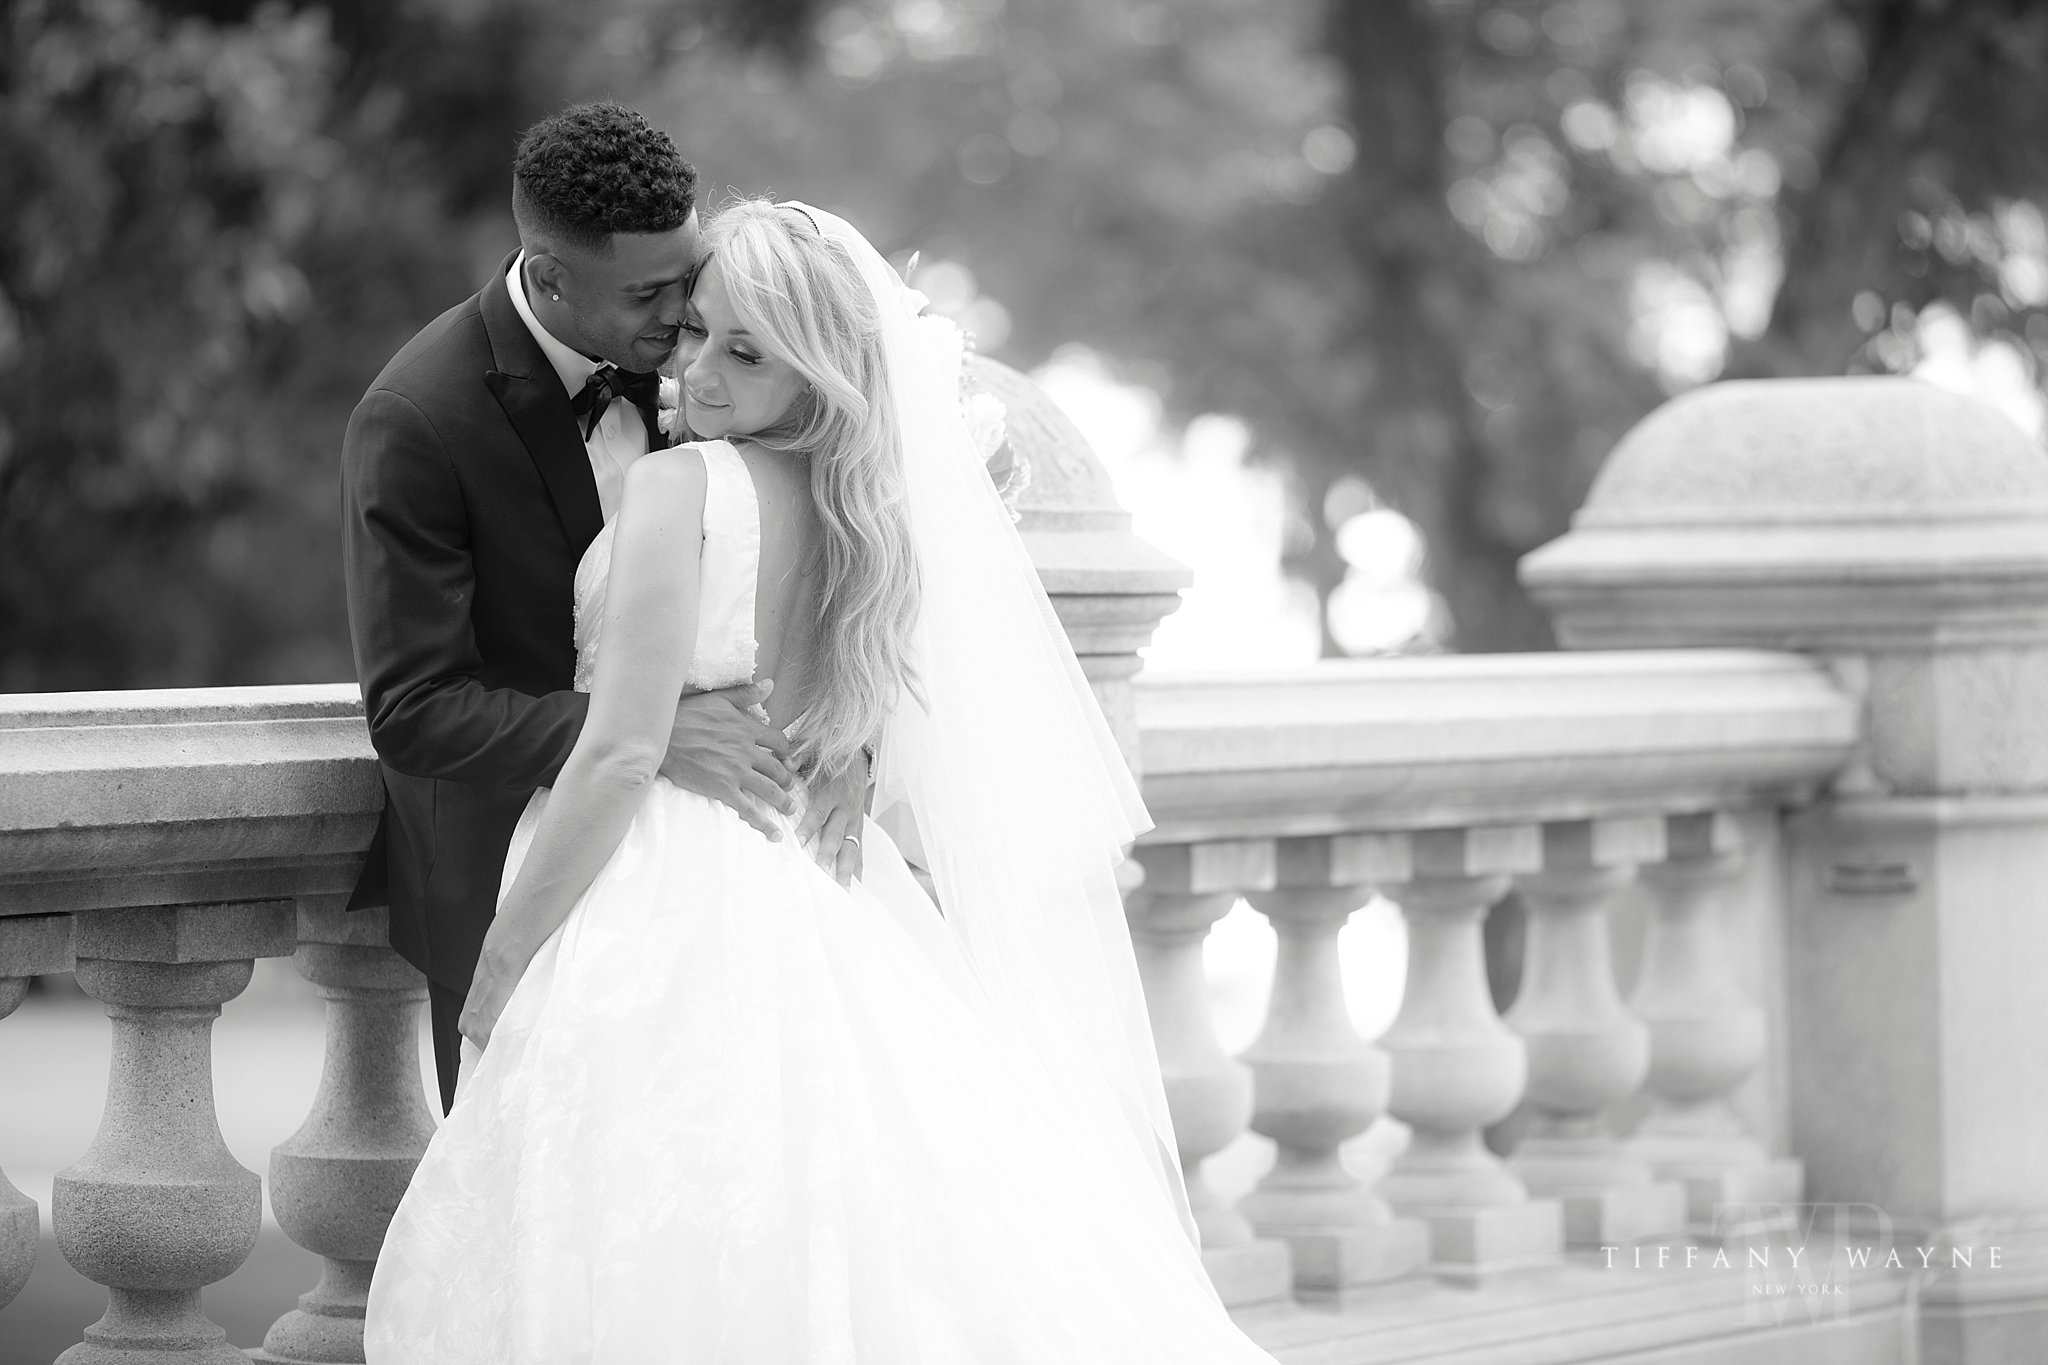 romantic black and white wedding day portraits with Tiffany Wayne Photography